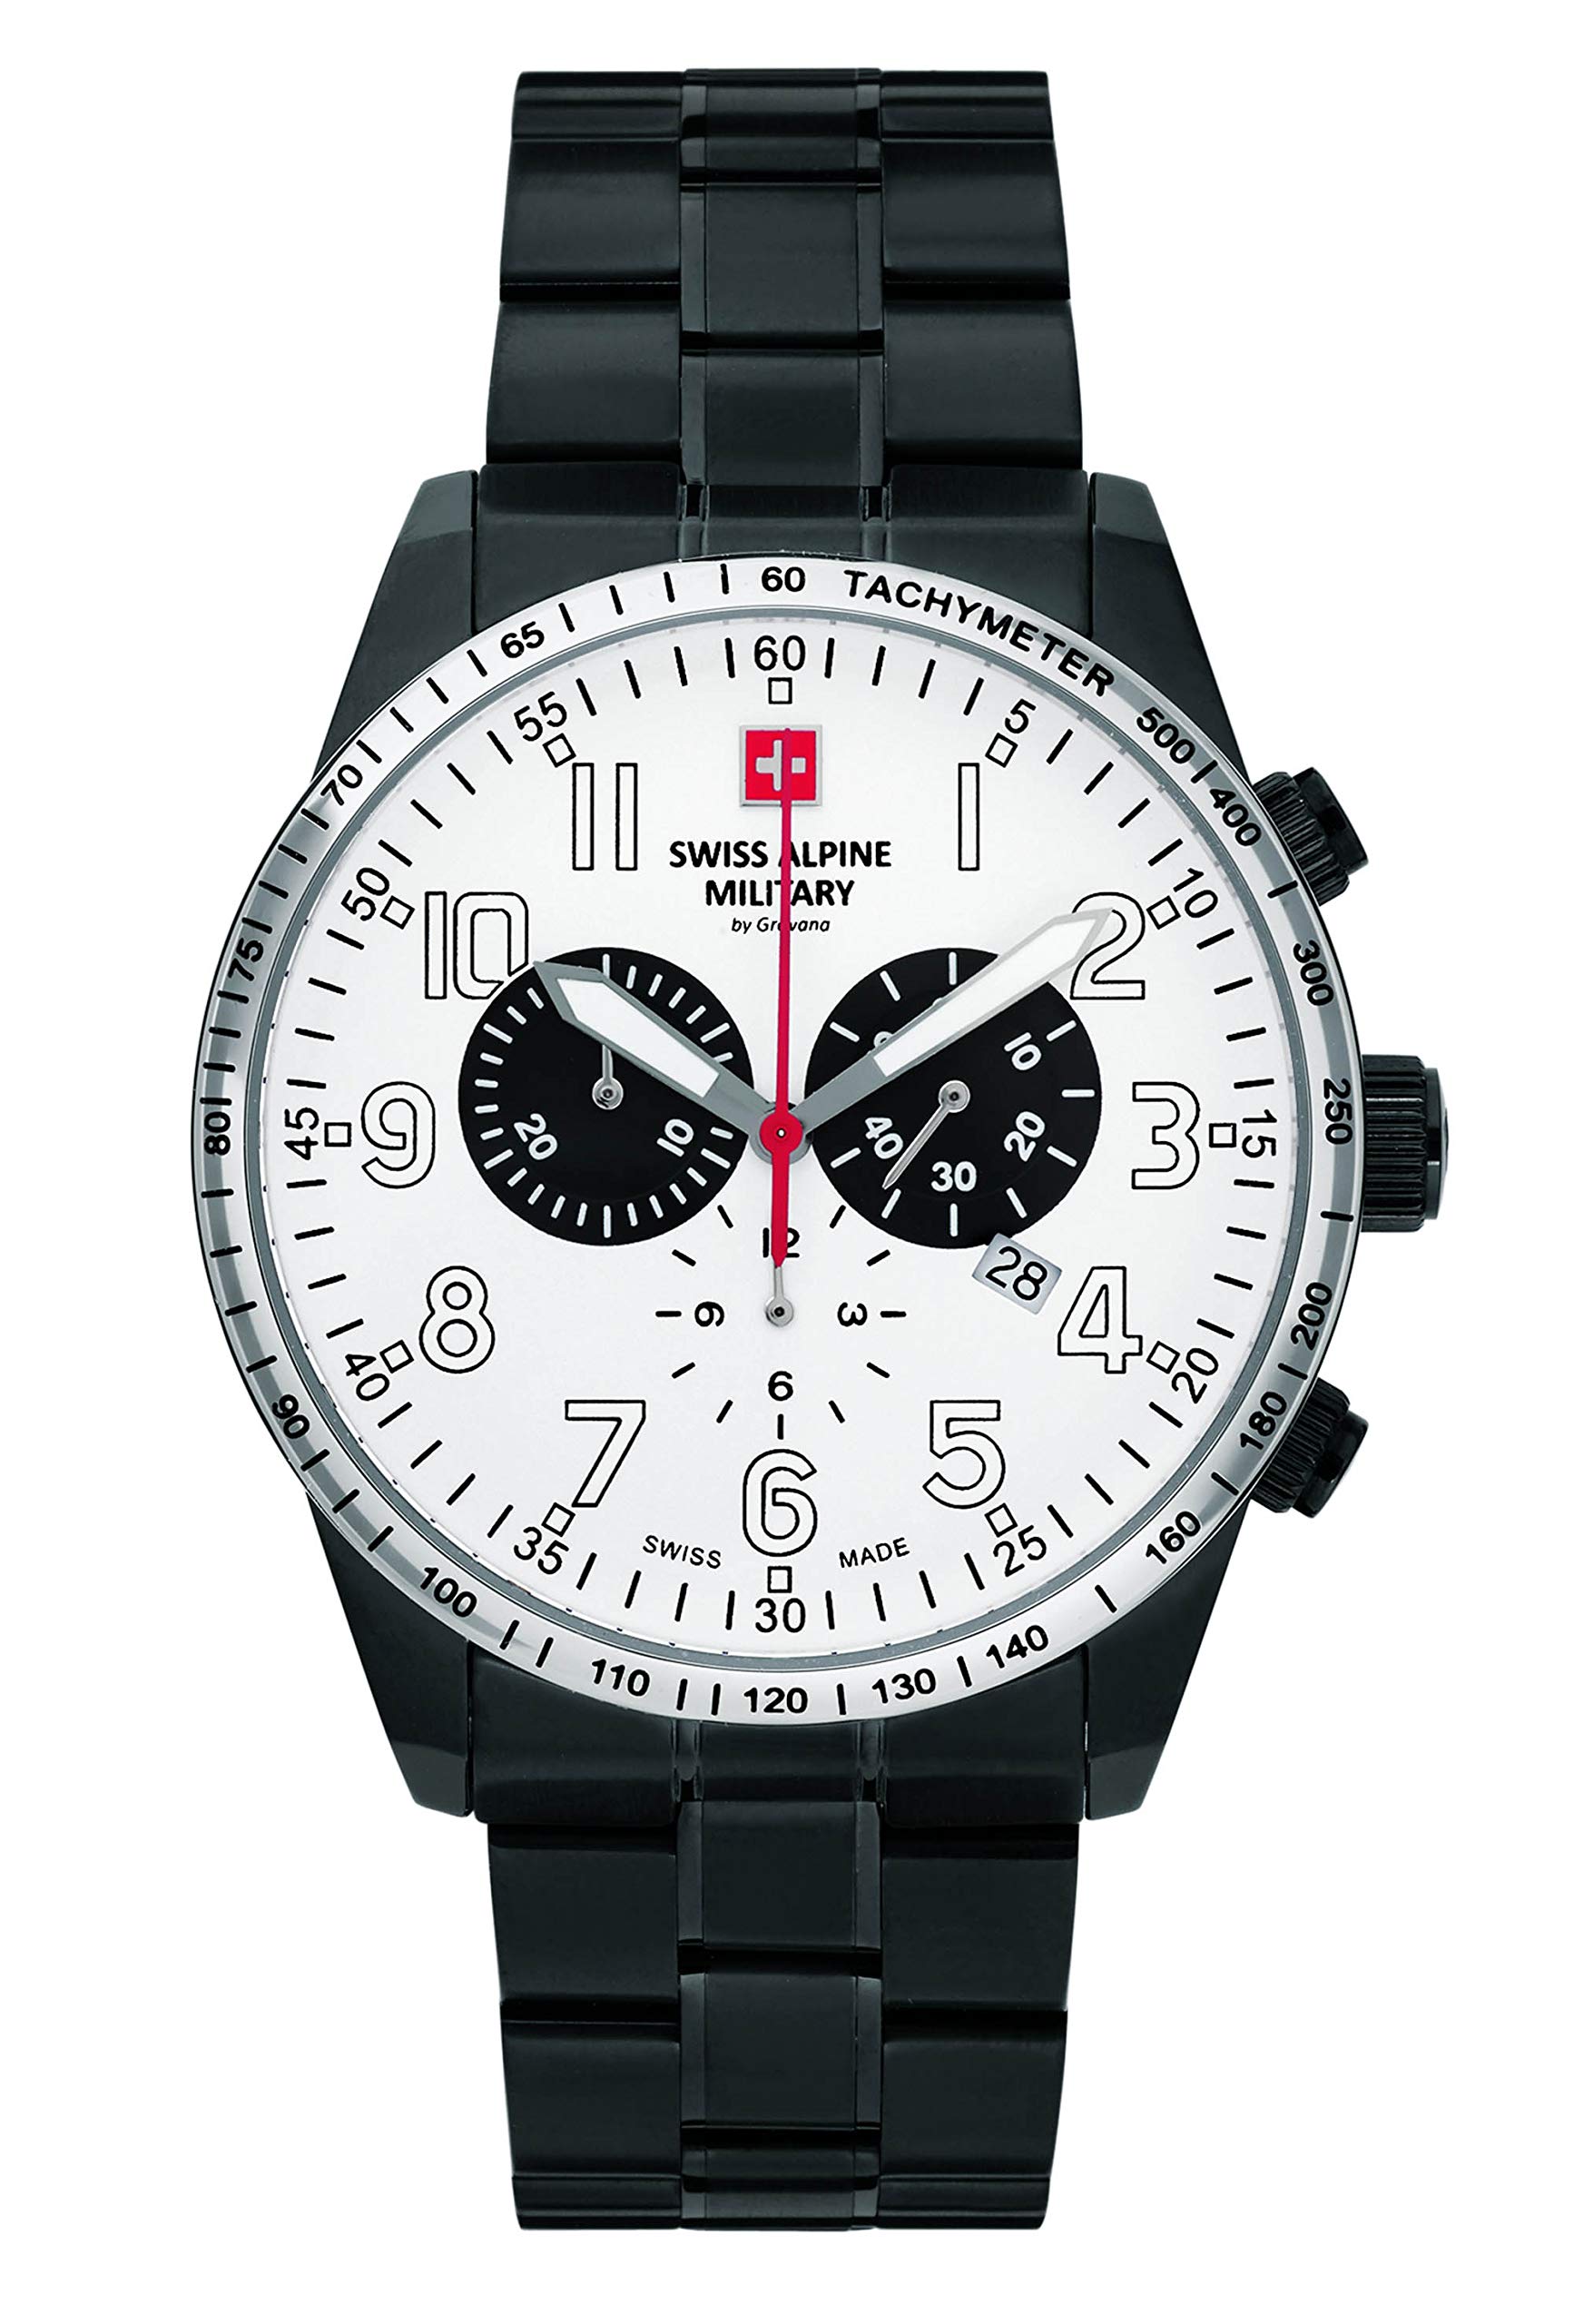 Grovana Swiss Alpine Military Herren Chronograph Uhr mit Edelstahlarmband 10 ATM, Black Ip/Silberfarben - 9173sam, Gurt